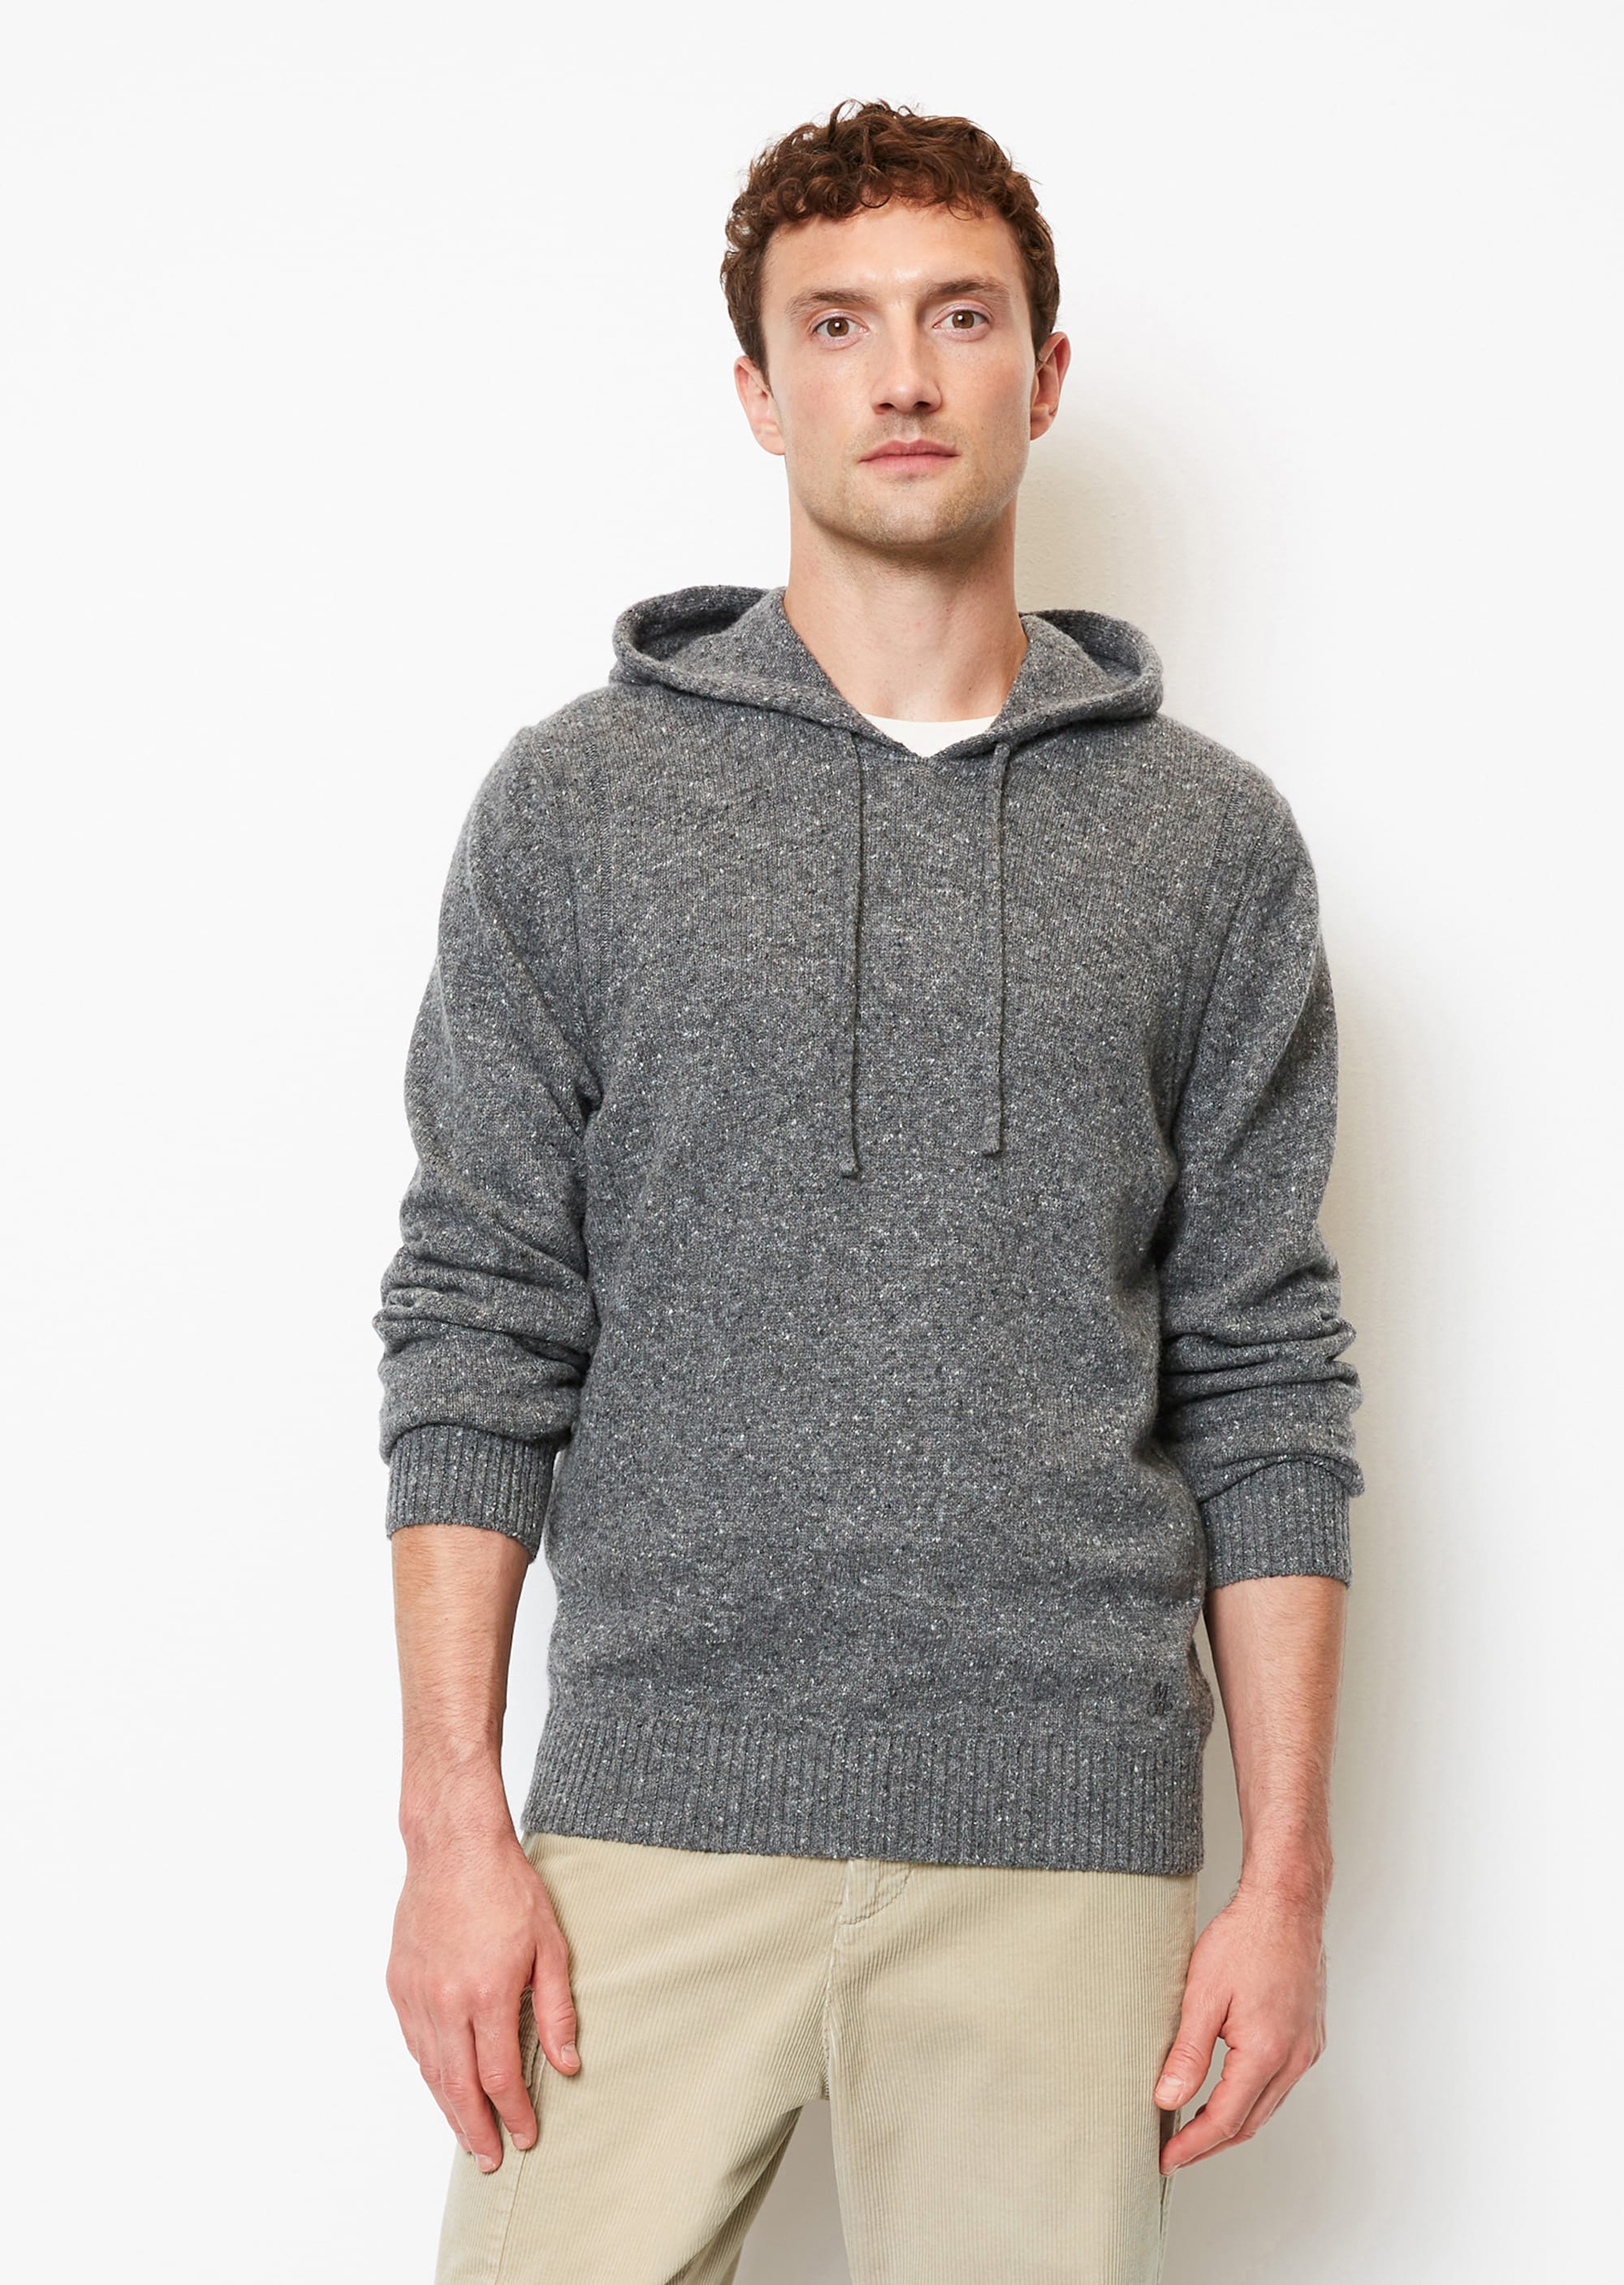 Pullover regular mit Kapuze aus gesprenkeltem Tweedgarn - grau |  Strickpullover | MARC O'POLO